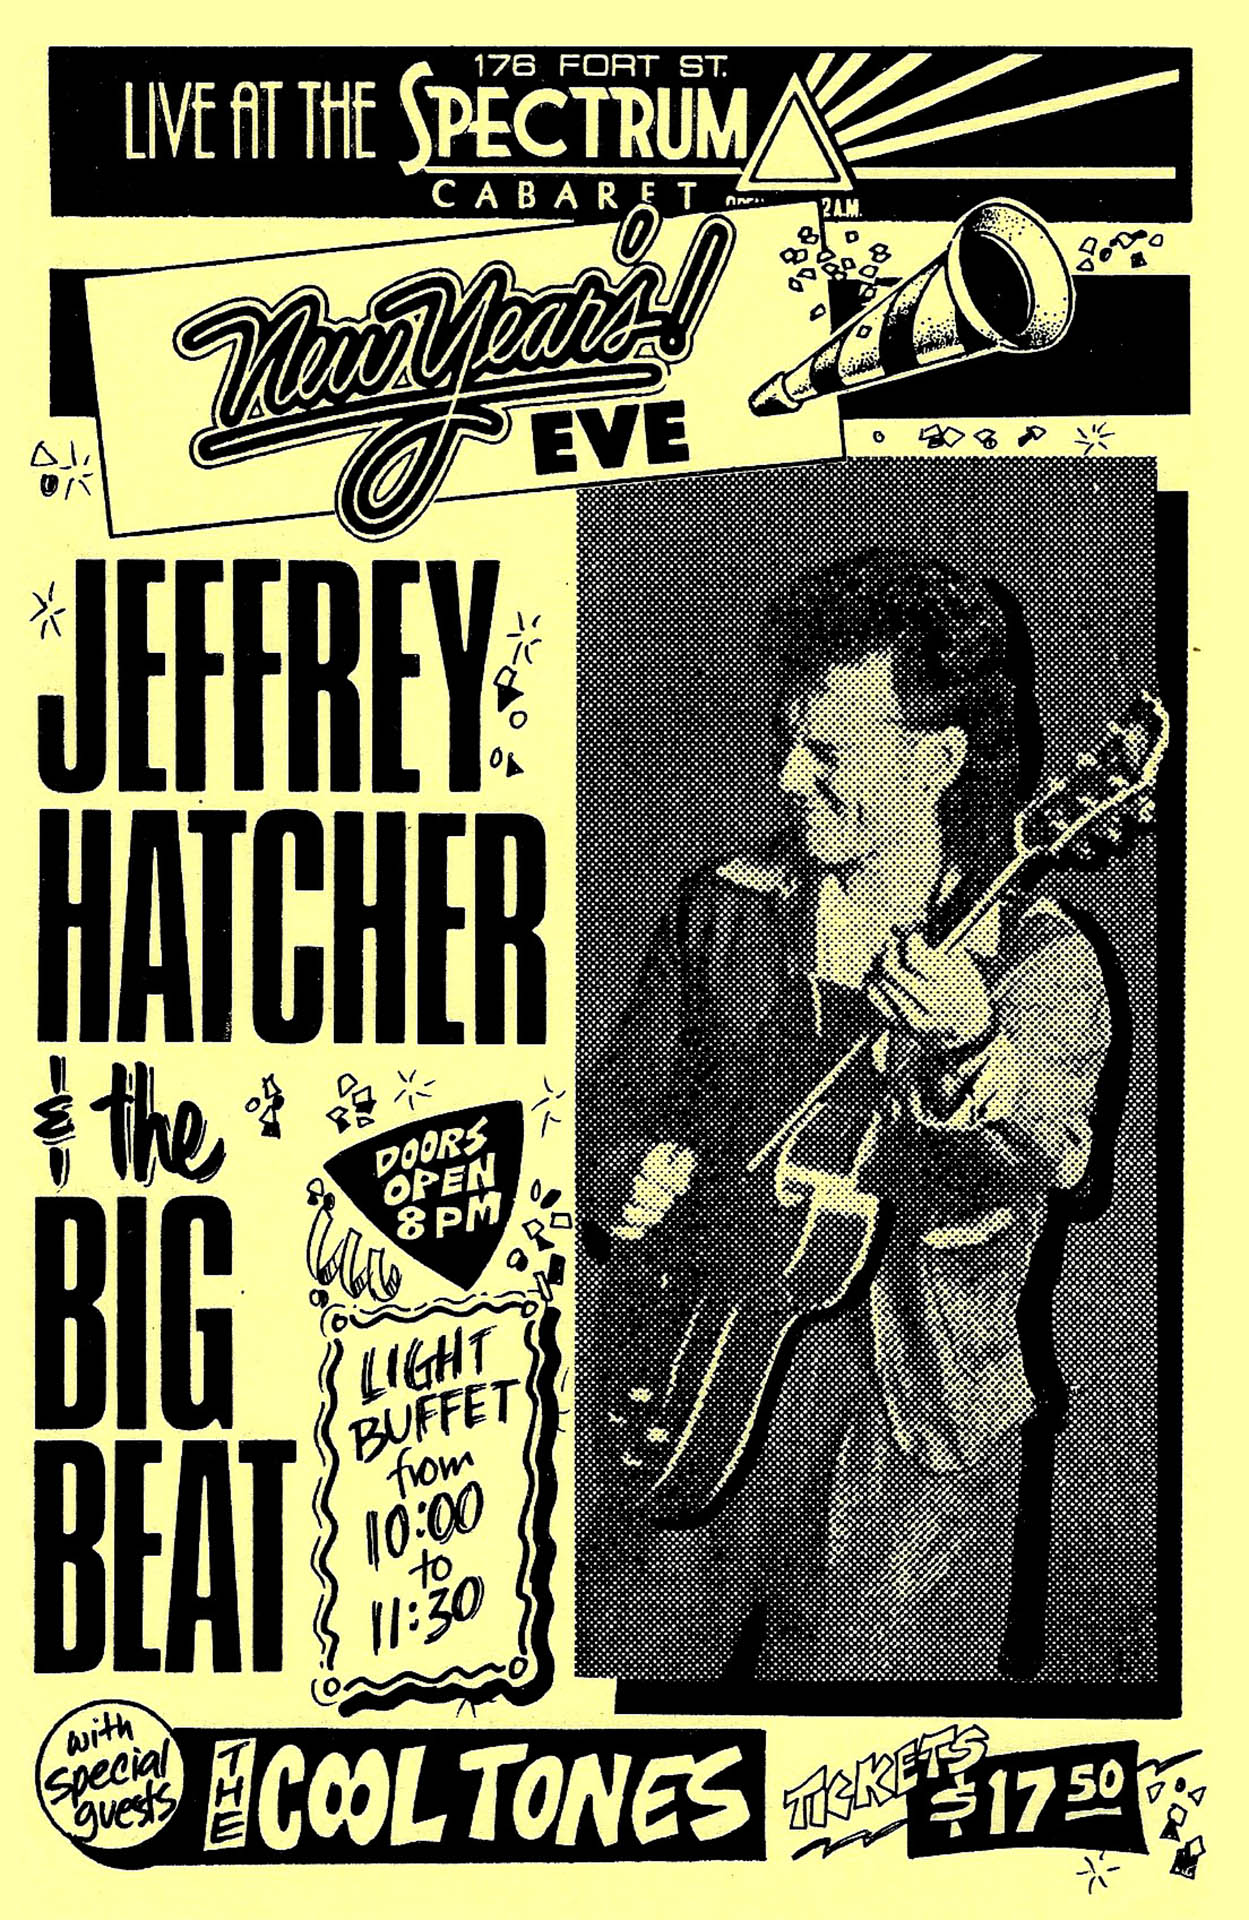 Jeffrey Hatcher and the Big Beat